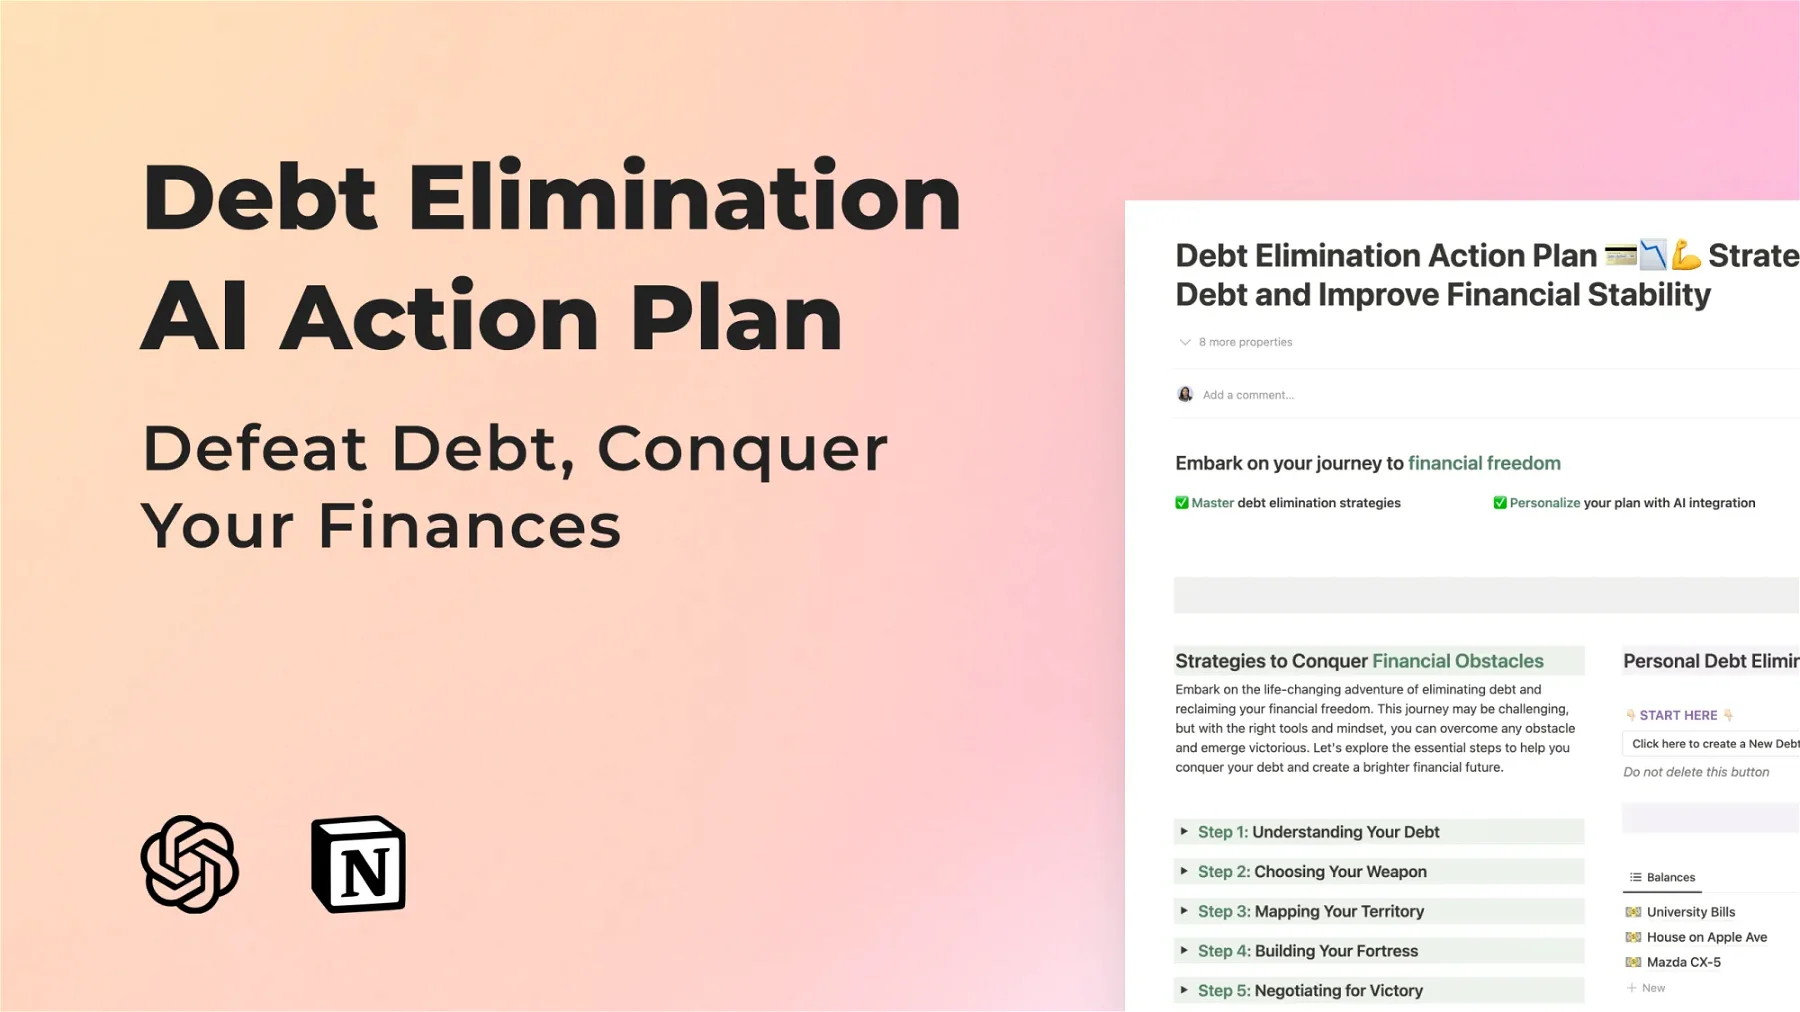 ðŸ’¸ Debt Elimination Action Plan